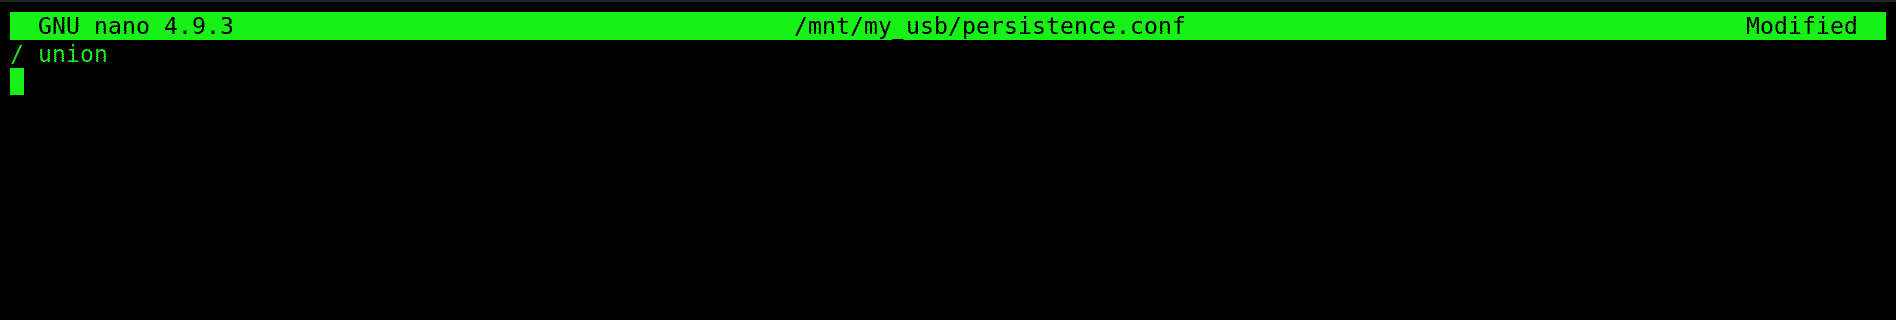 Kali Linux USB Persistence Kali Linux USB 